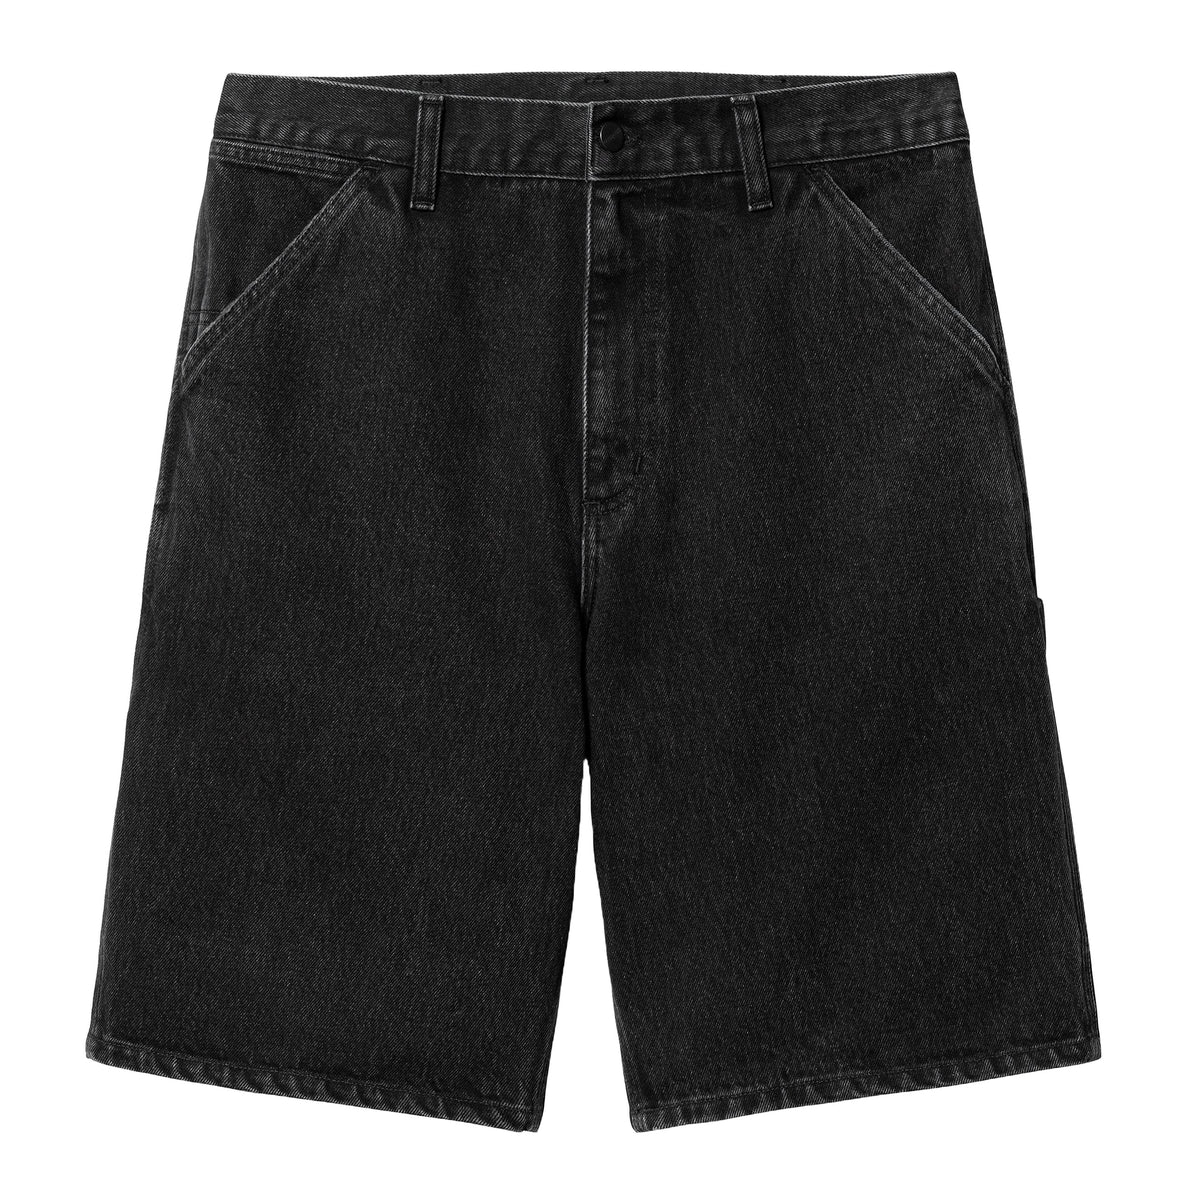 Carhartt Wip Men's Single Knee Jeans Shorts Black